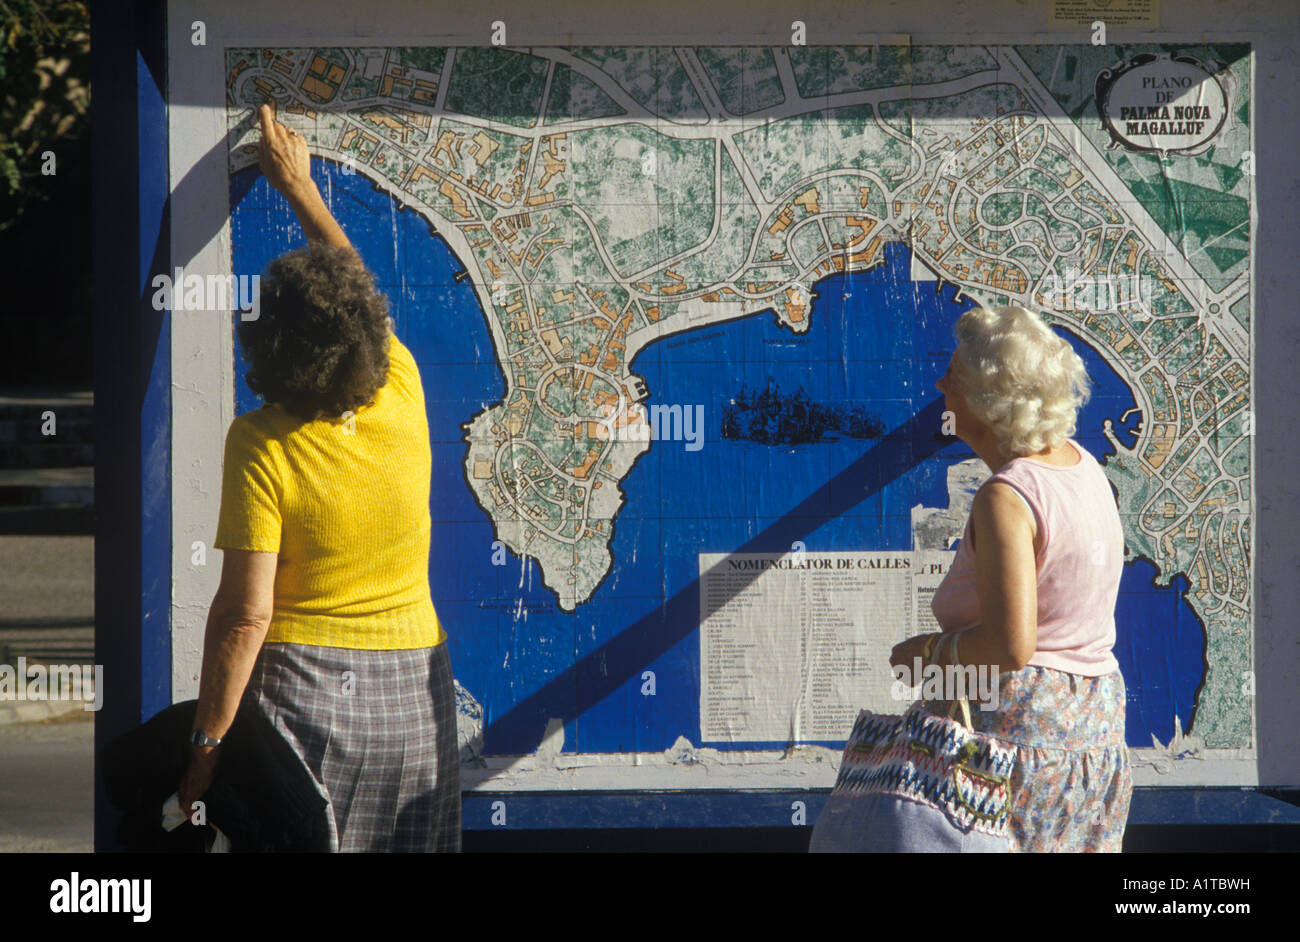 English women on holiday look at a plan of the city of  Palma Nova Magaluf Mallorca Balearic islands Spain 1980s HOMER SYKES Stock Photo